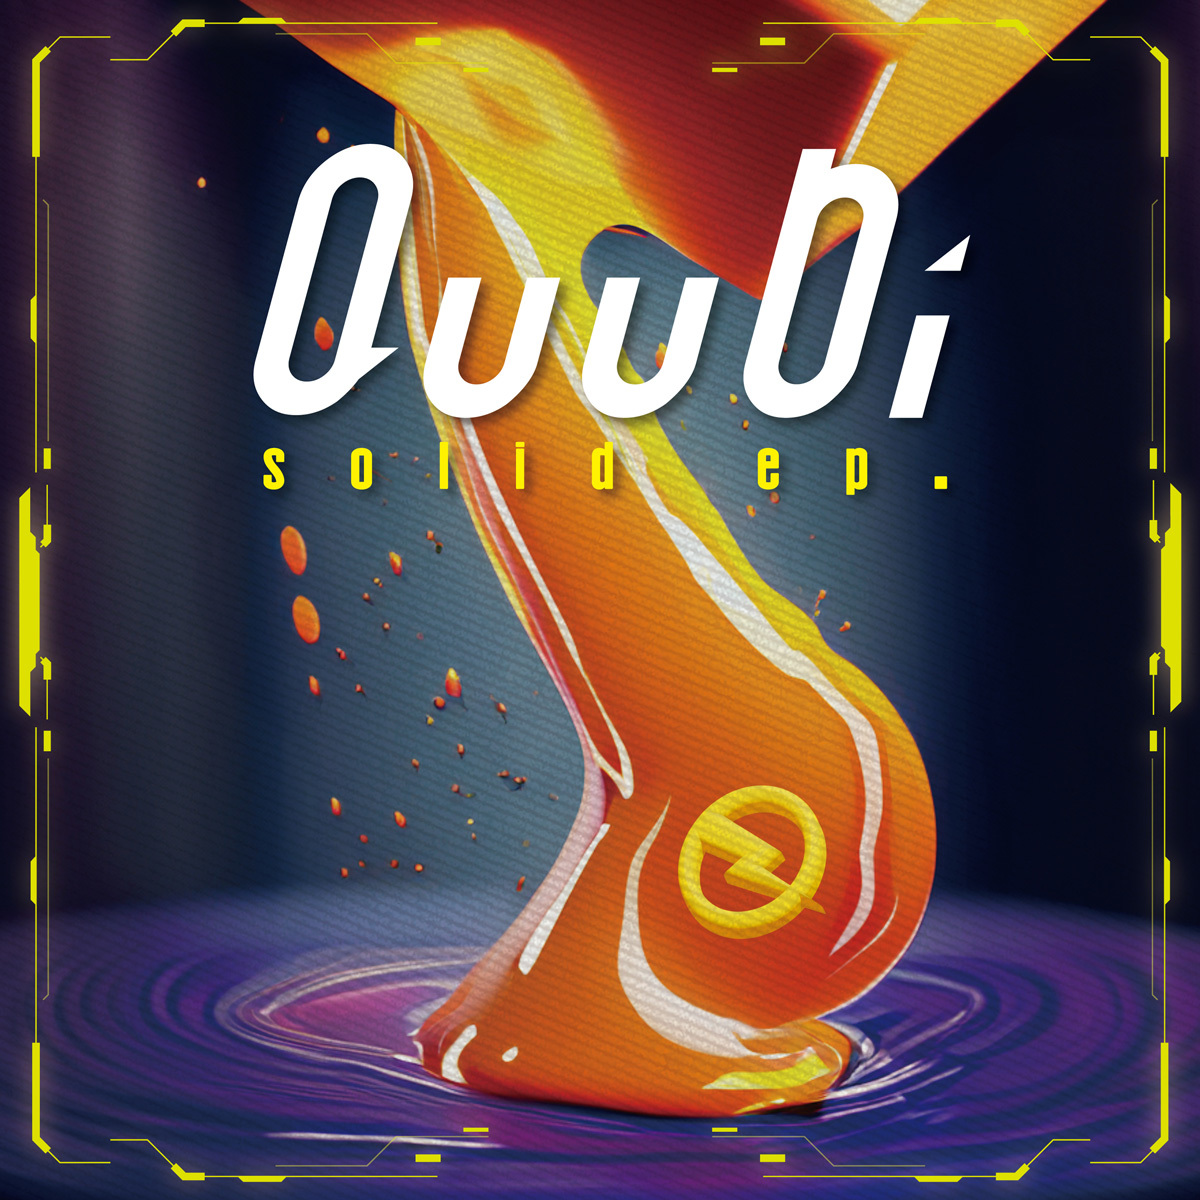 Quubi 1st EP「solid ep.」通常盤ジャケット